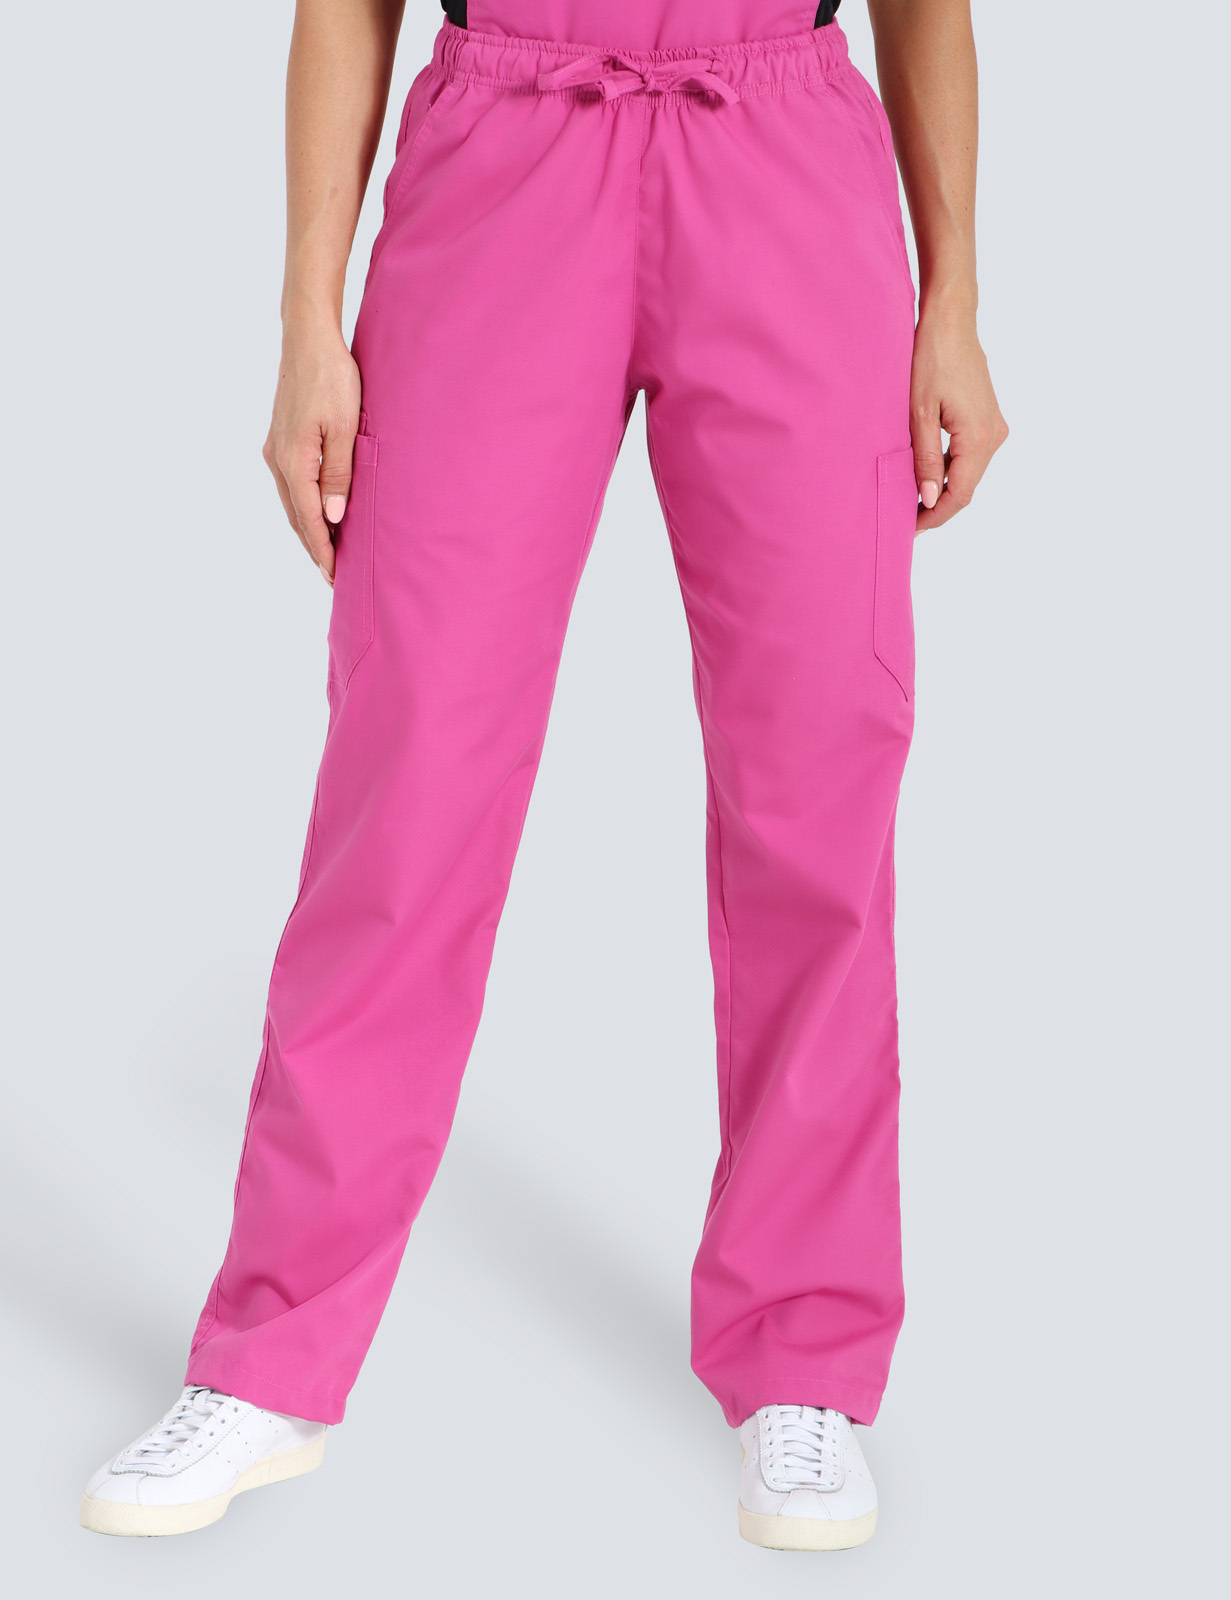 Women's Cargo Performance Pants - Pink - 3X Large